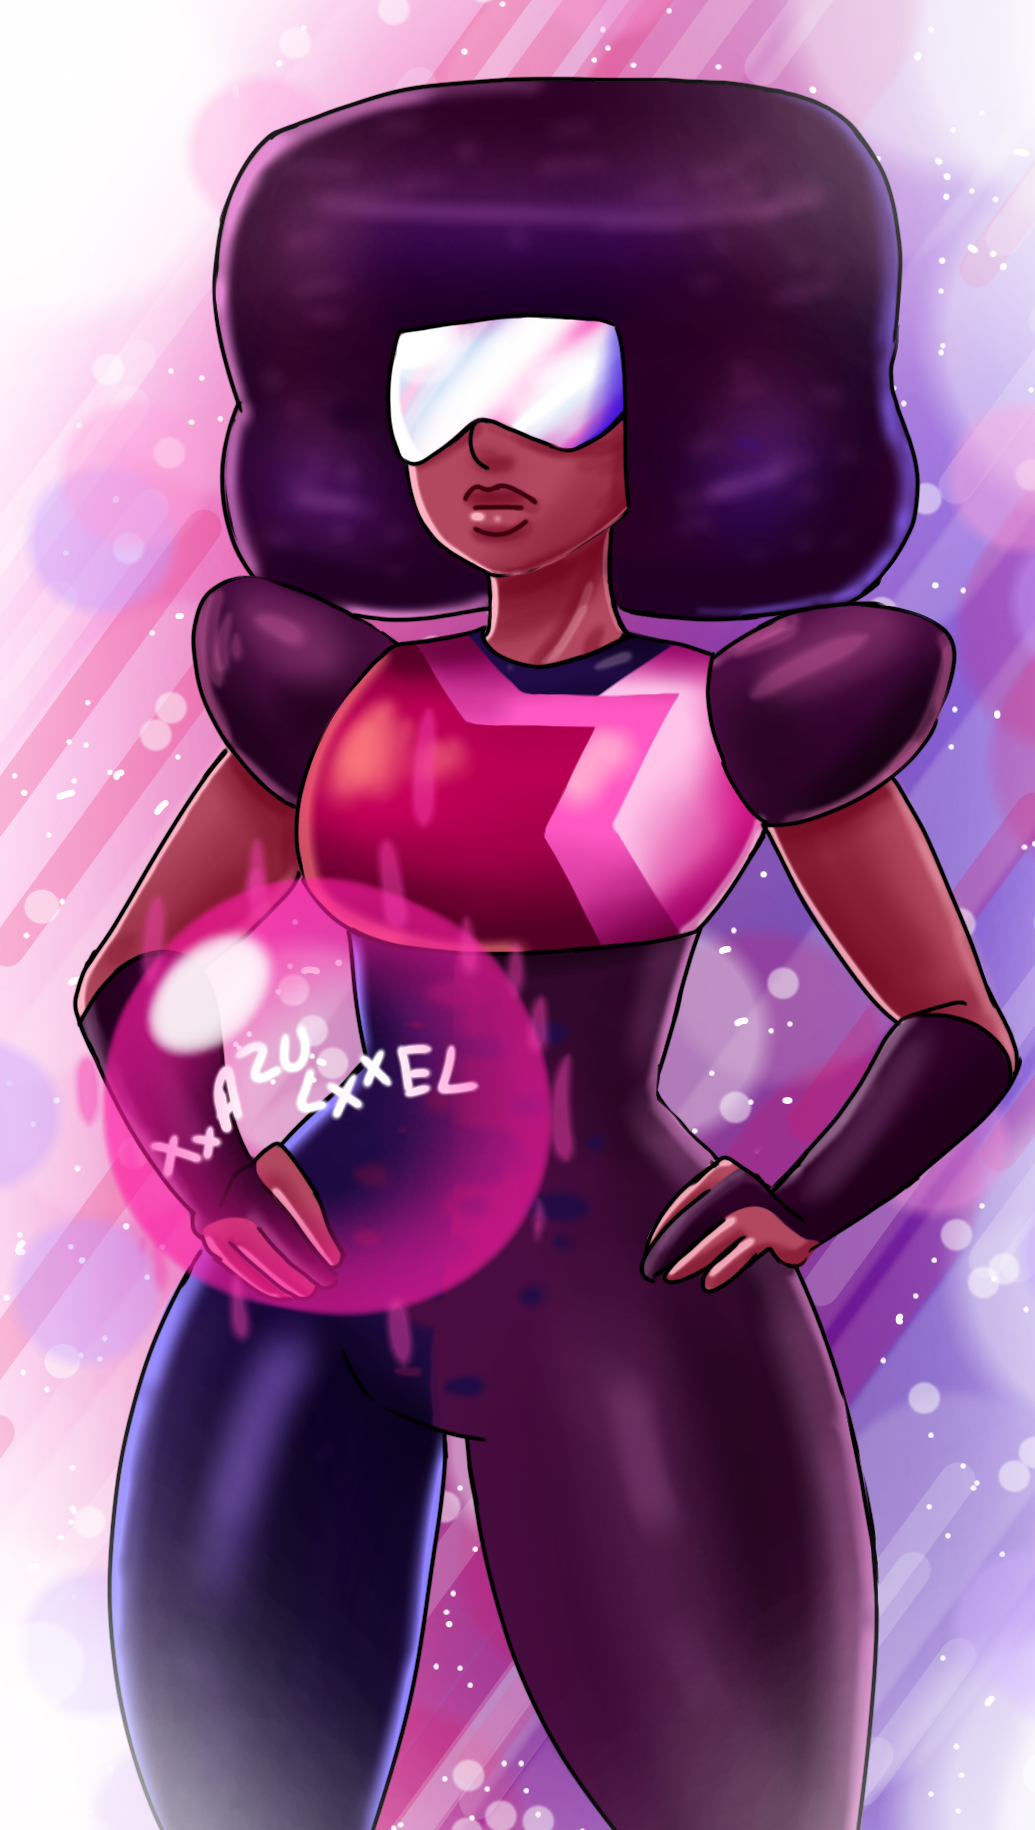 Garnet from Steven universe